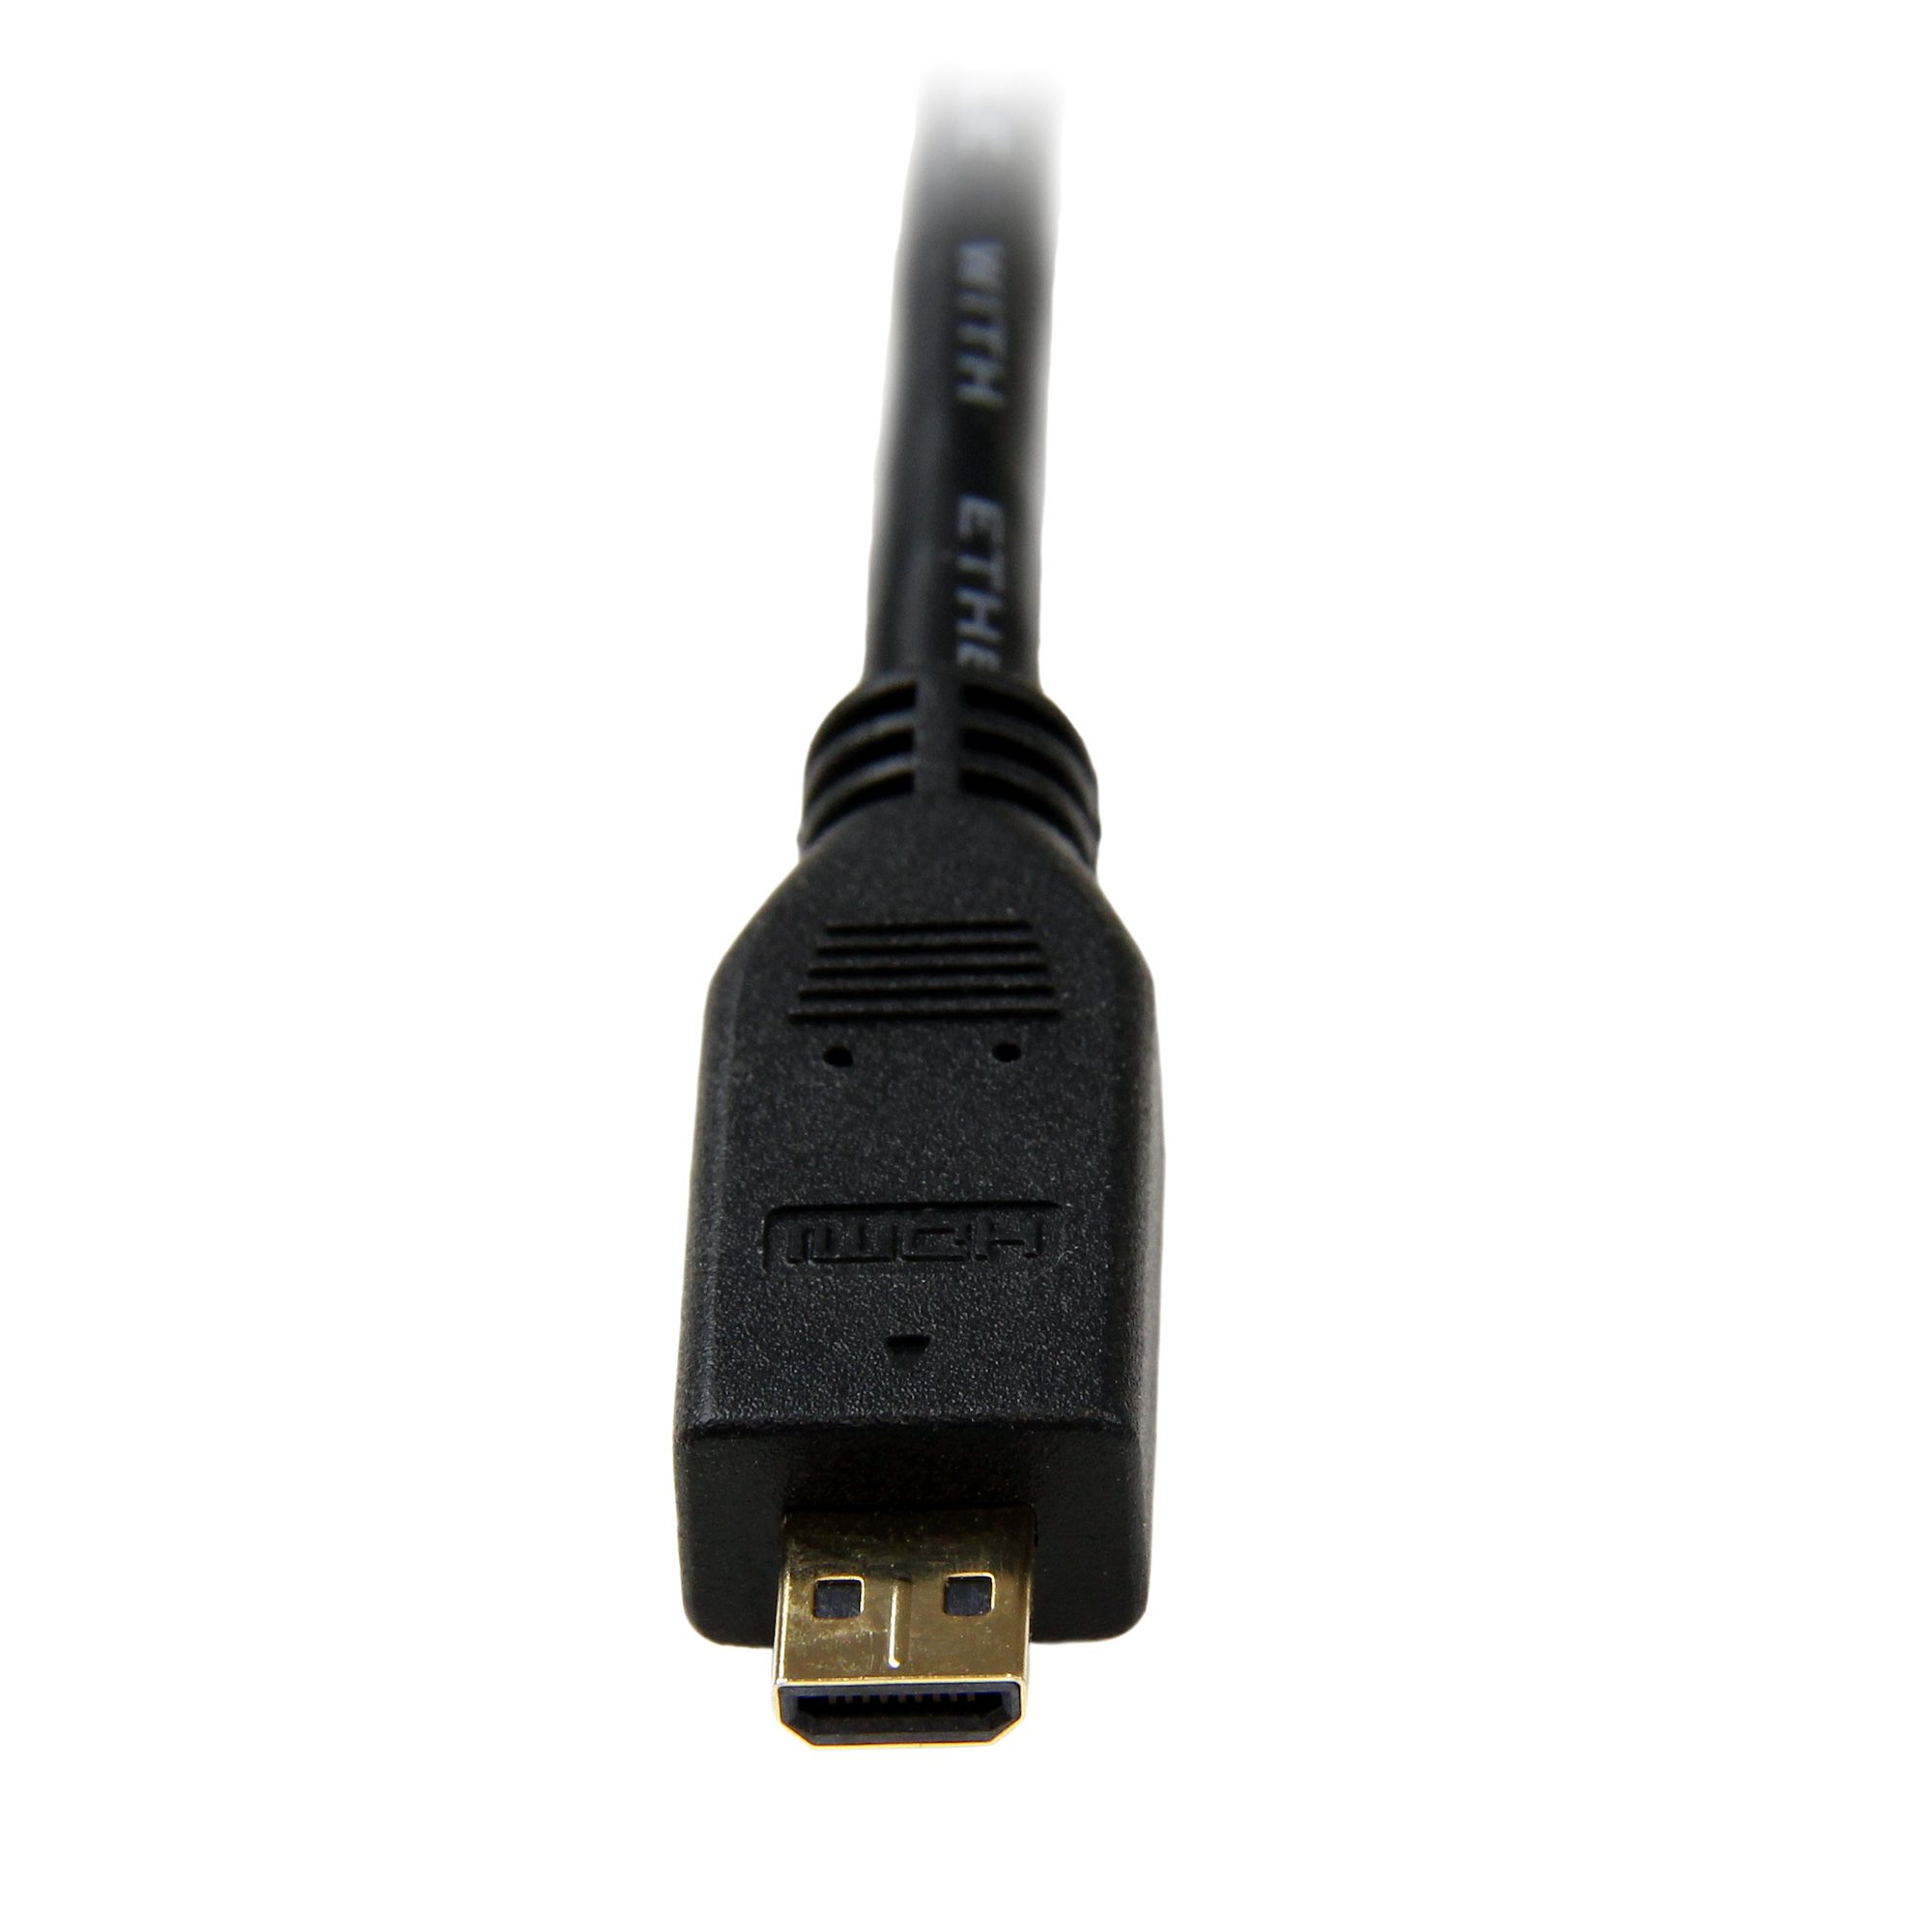 CABLE HDMI 3 EN 1 MICRO HDMI - NANO HDMI